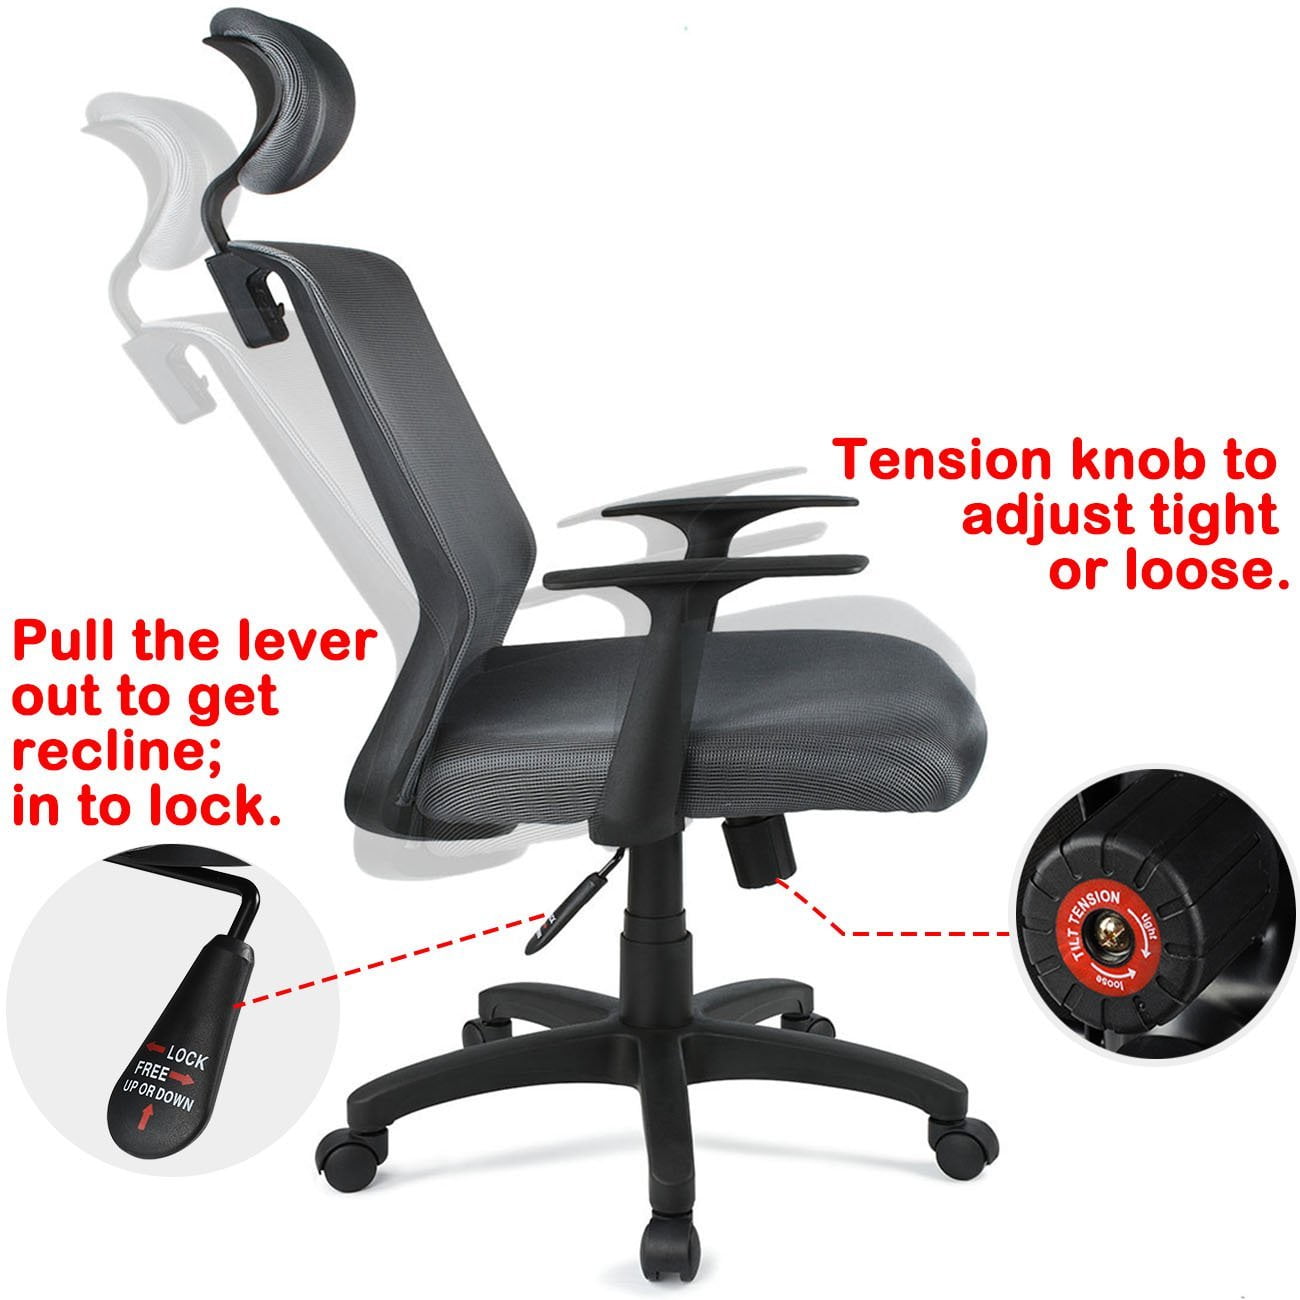 Tilt tension на кресле